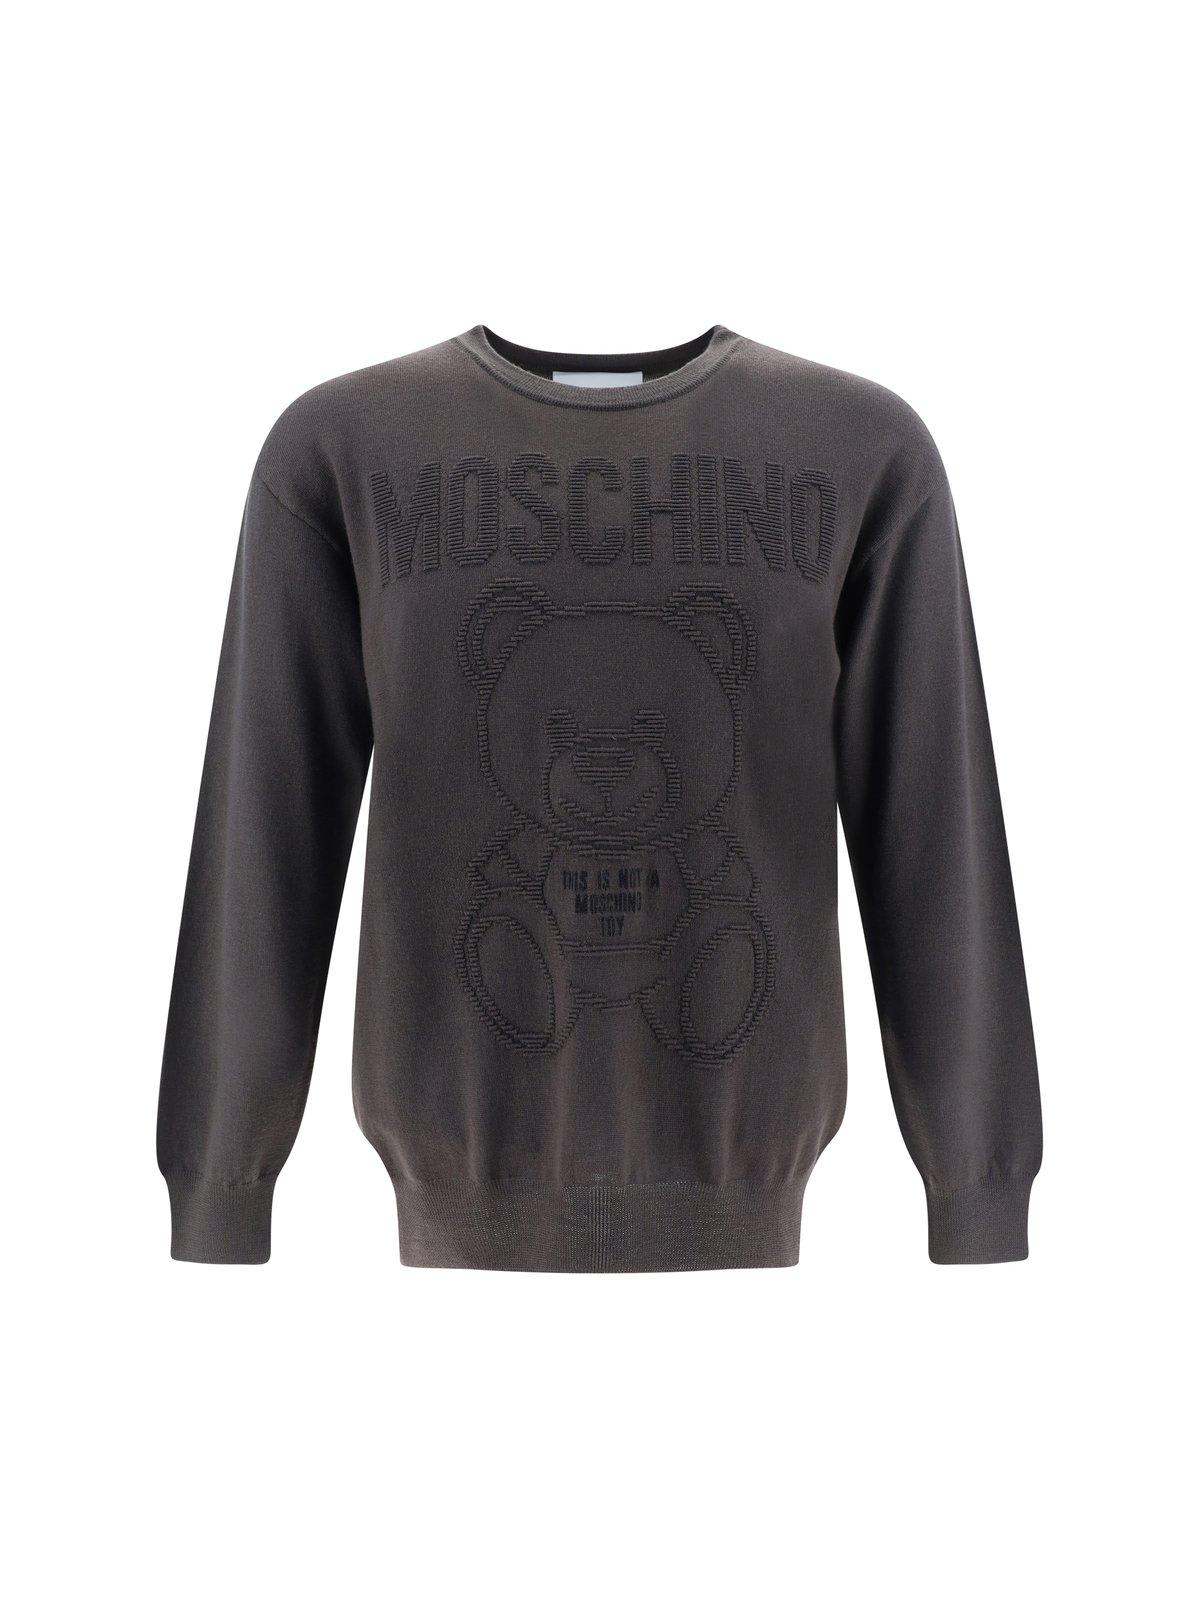 Moschino Men's monogram-jacquard Denim Shirt - Blue - Casual Shirts